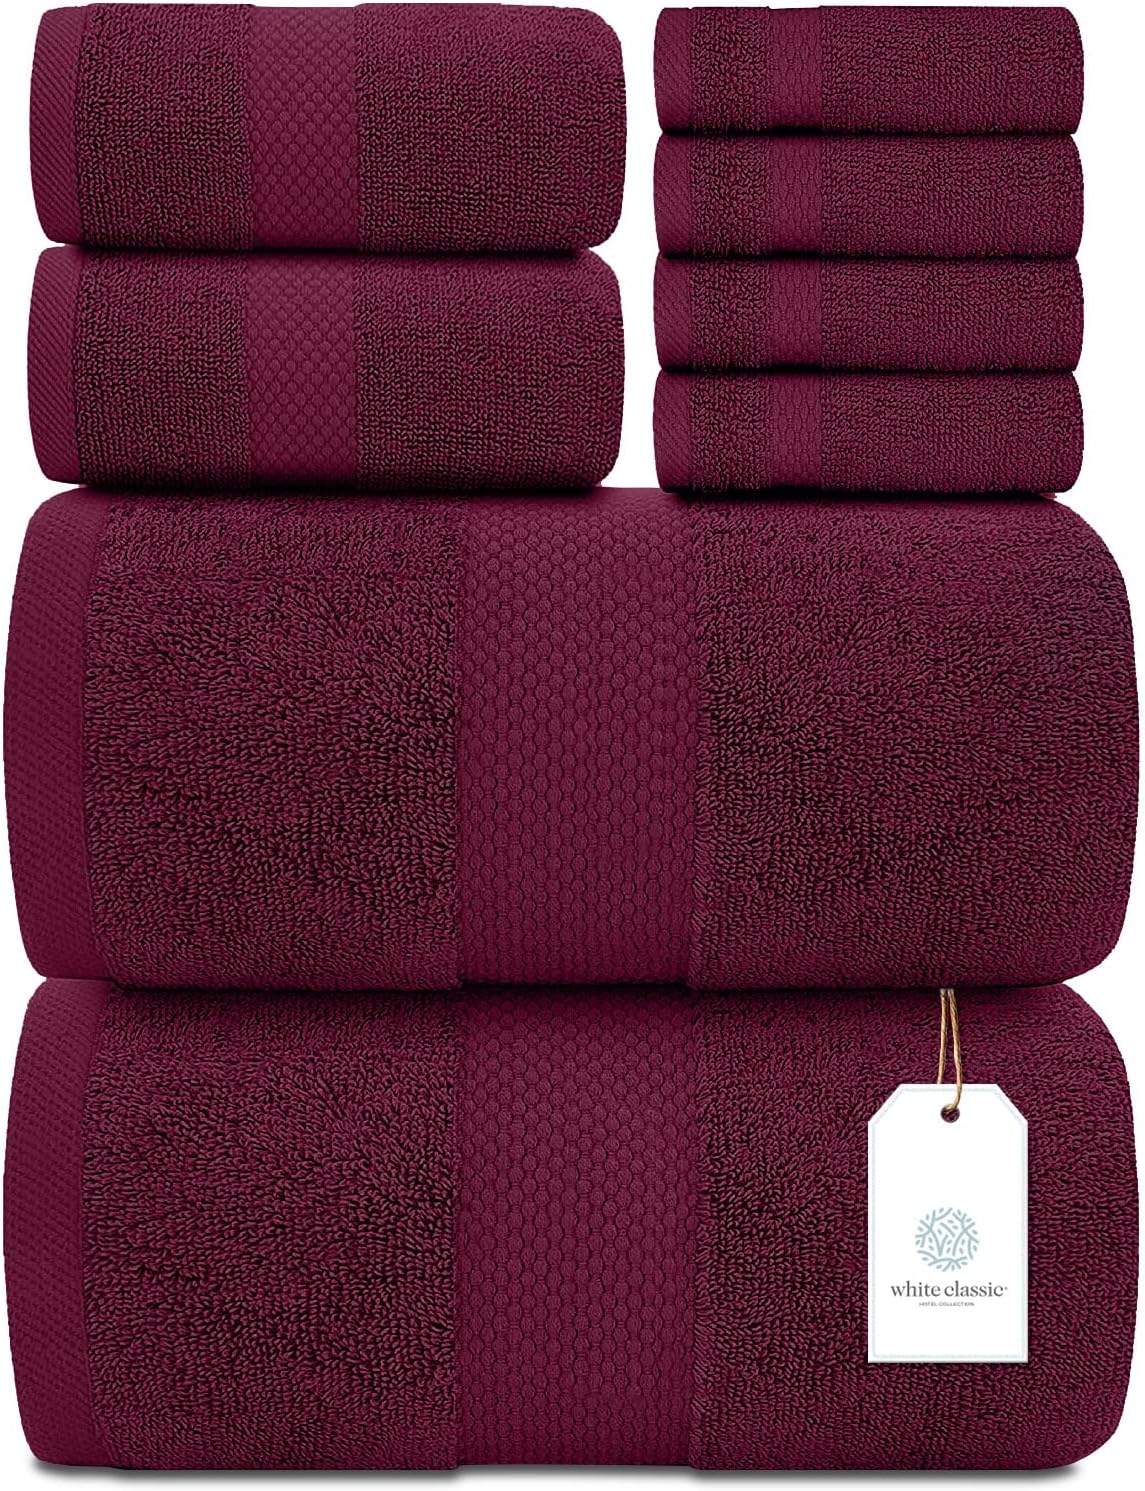 Hotel Collection Luxury 16 Bath Towels | 16 Hand Towels | 32 Washcloths - [64 Piece Set]